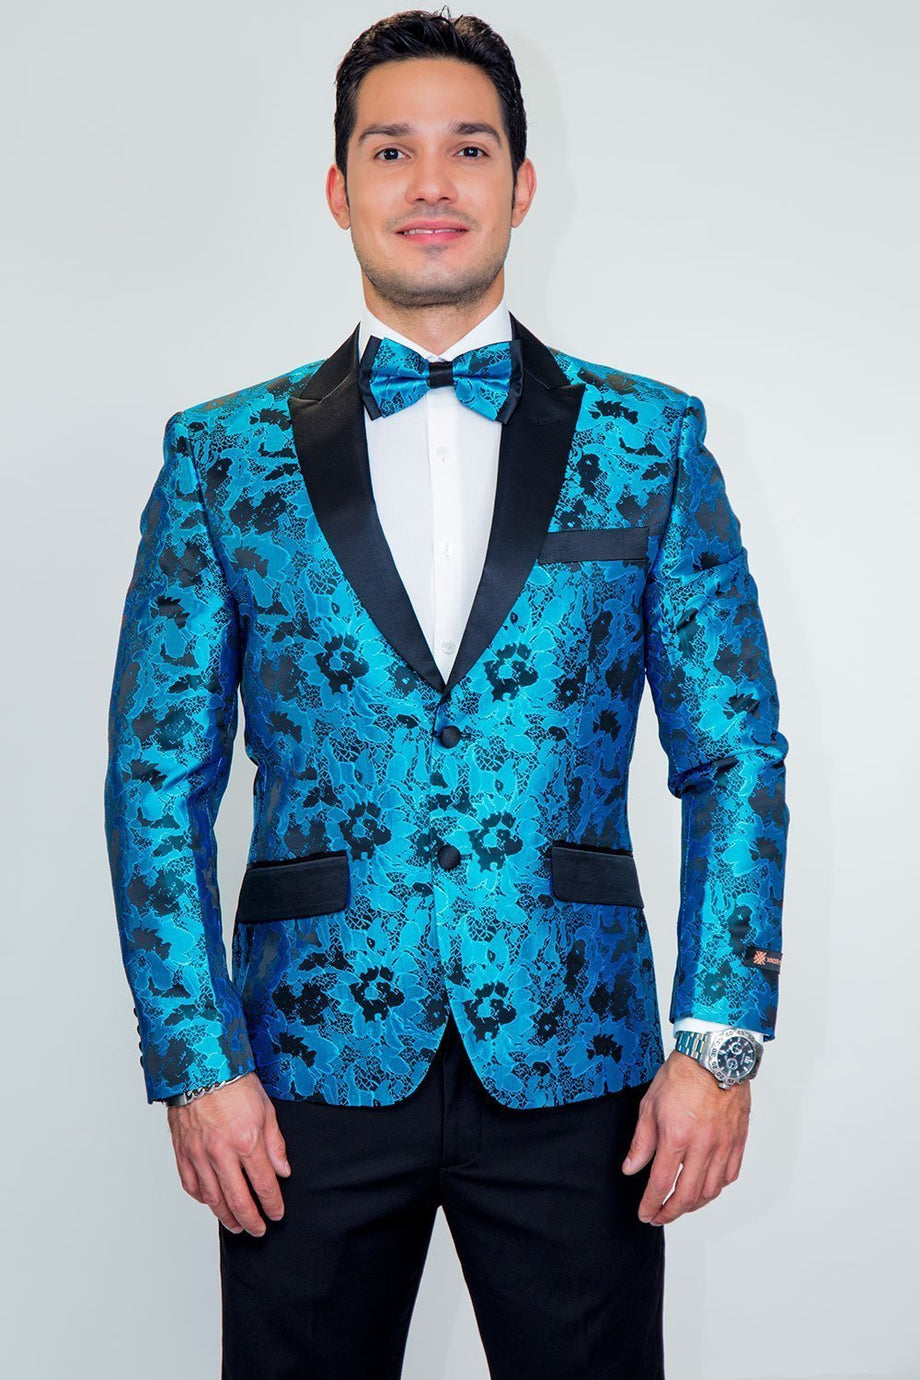 Xander Xiao "Amsterdam" Turquoise Tuxedo Jacket (Separates)